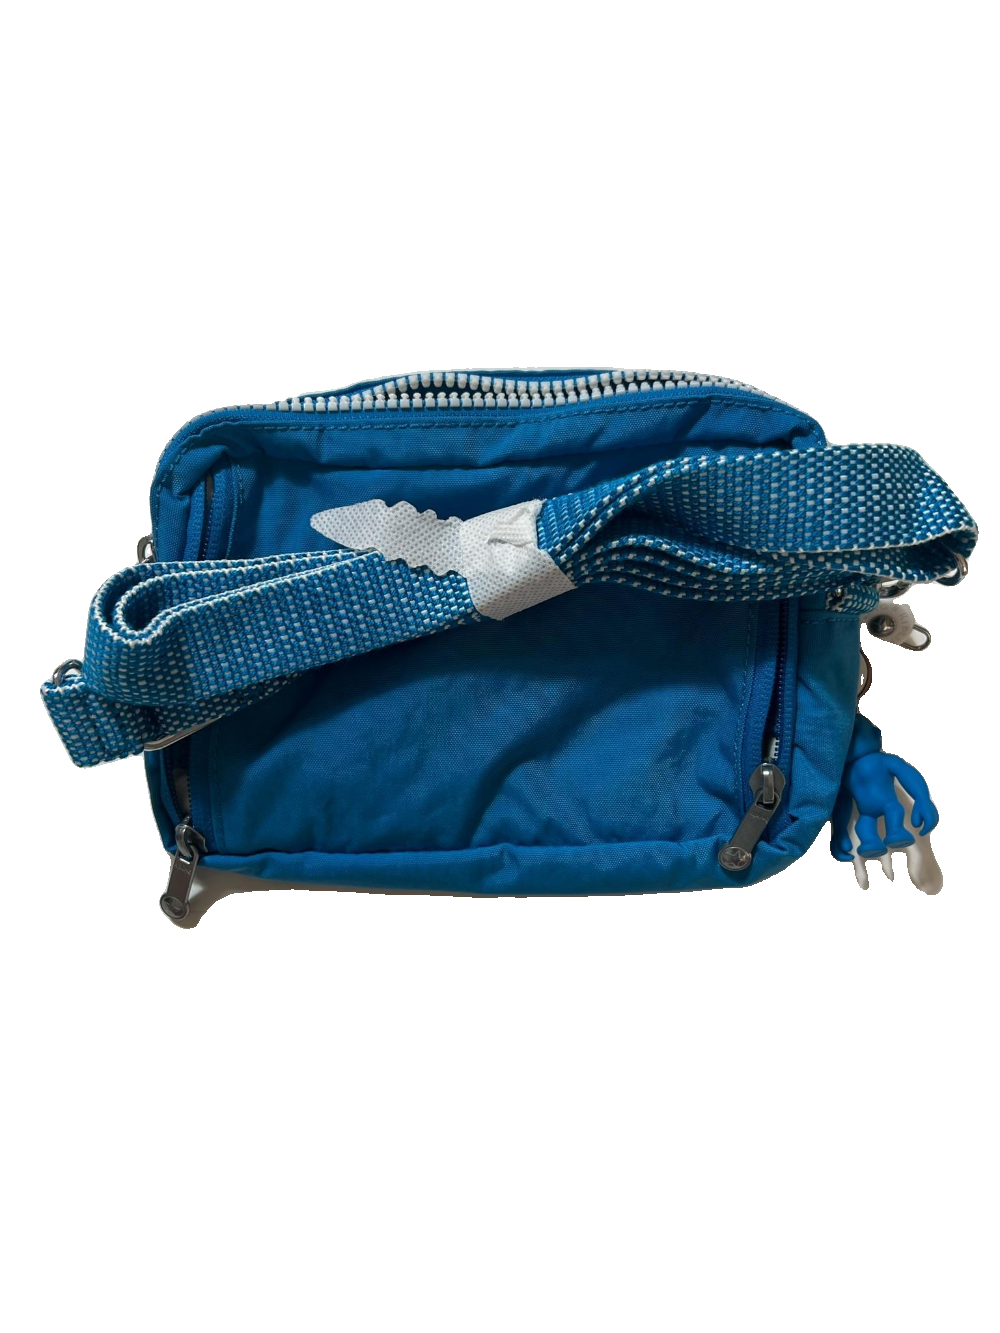 Kipling- Blue Handbag NEW WITH TAGS